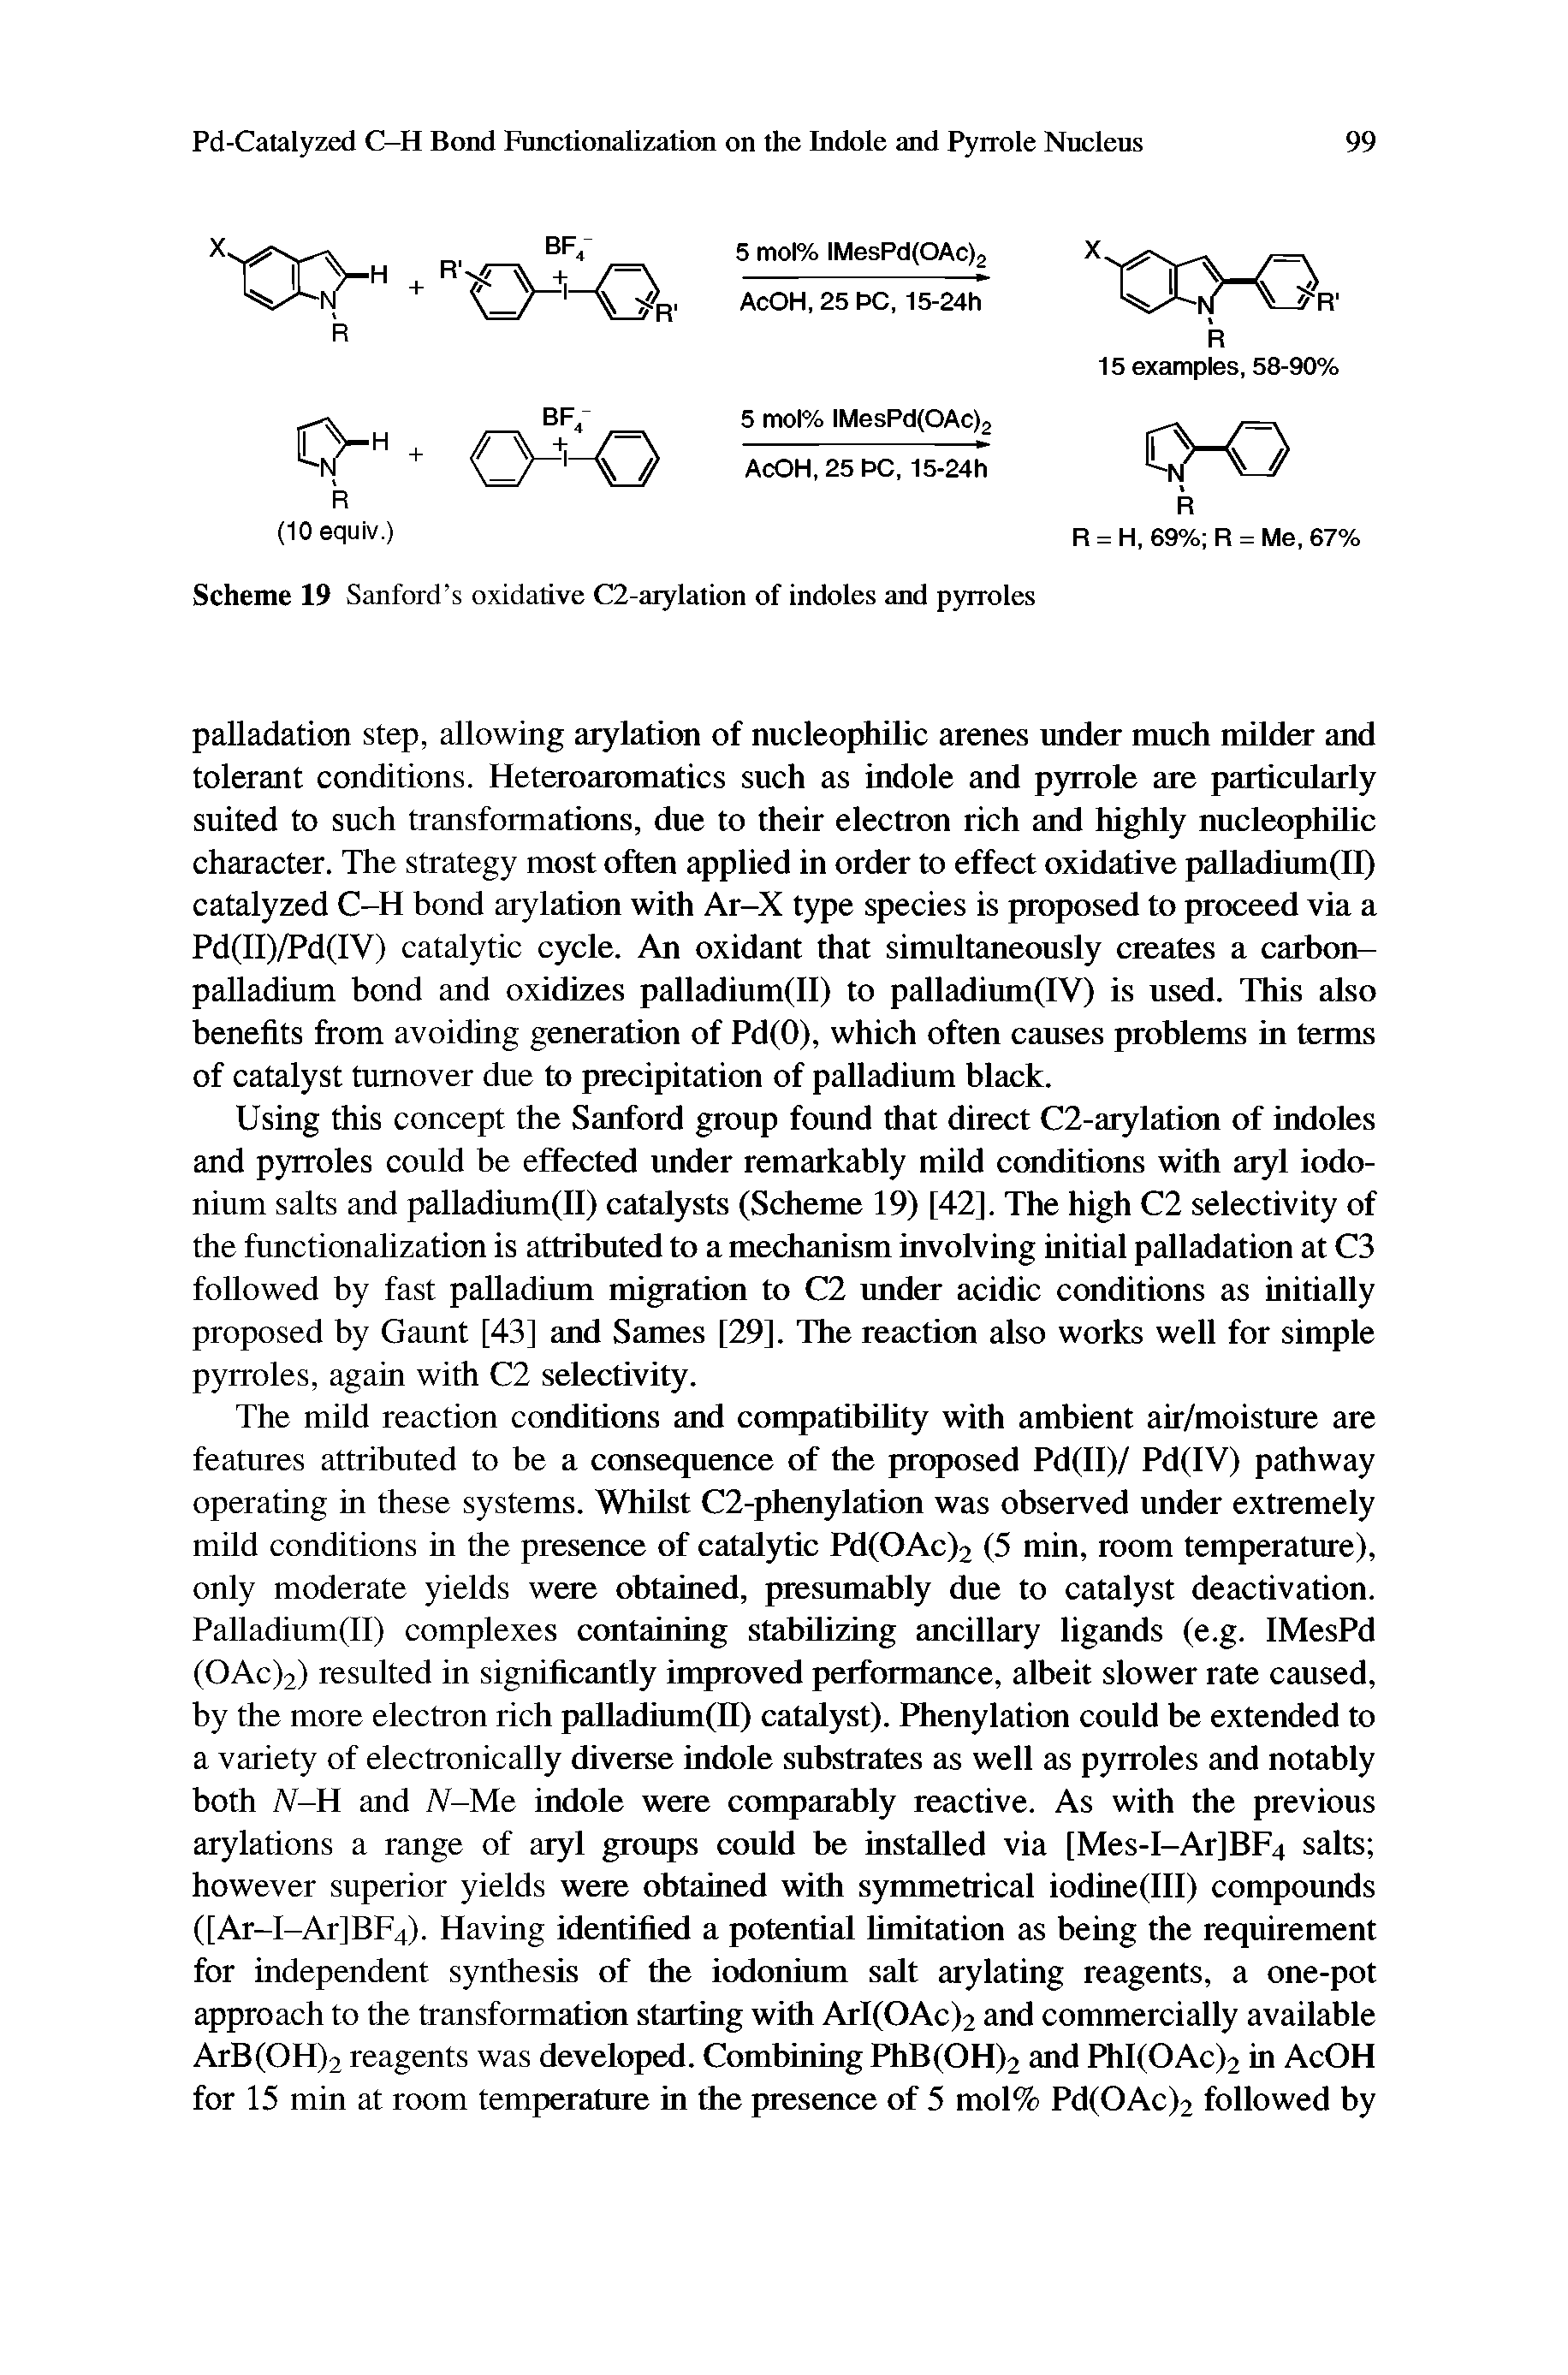 Scheme 19 Sanford s oxidative C2-arylation of indoles and pyrroles...